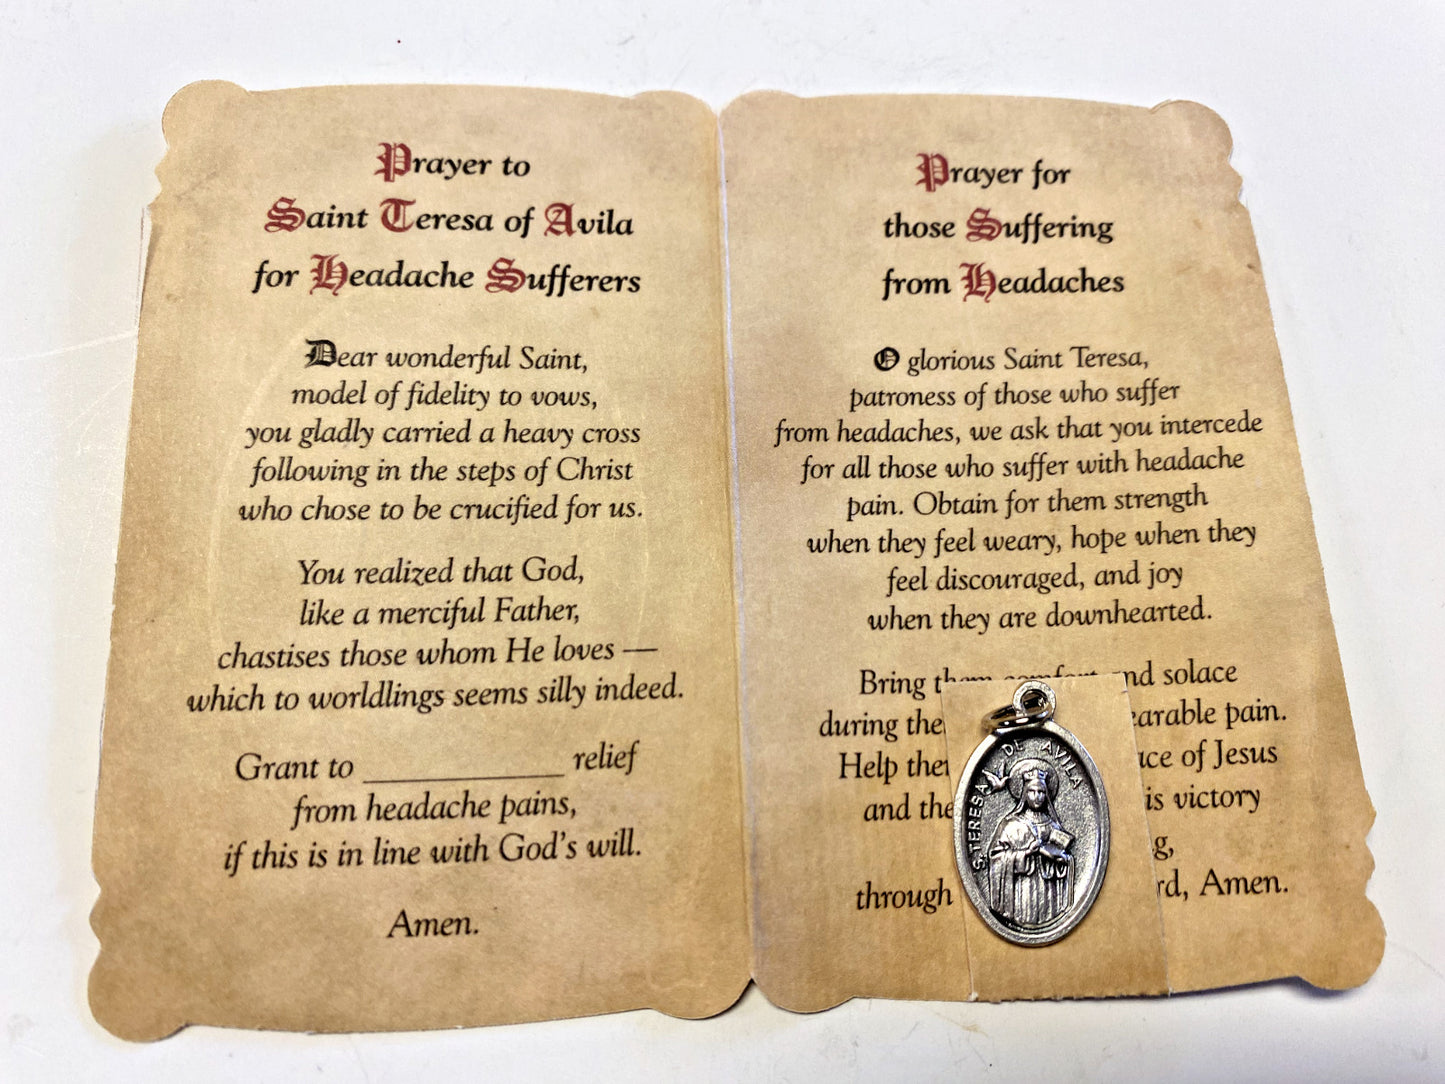 Saint Teresa of Avila "Headache, Prayer" Card + Medal, New from Italy - Bob and Penny Lord